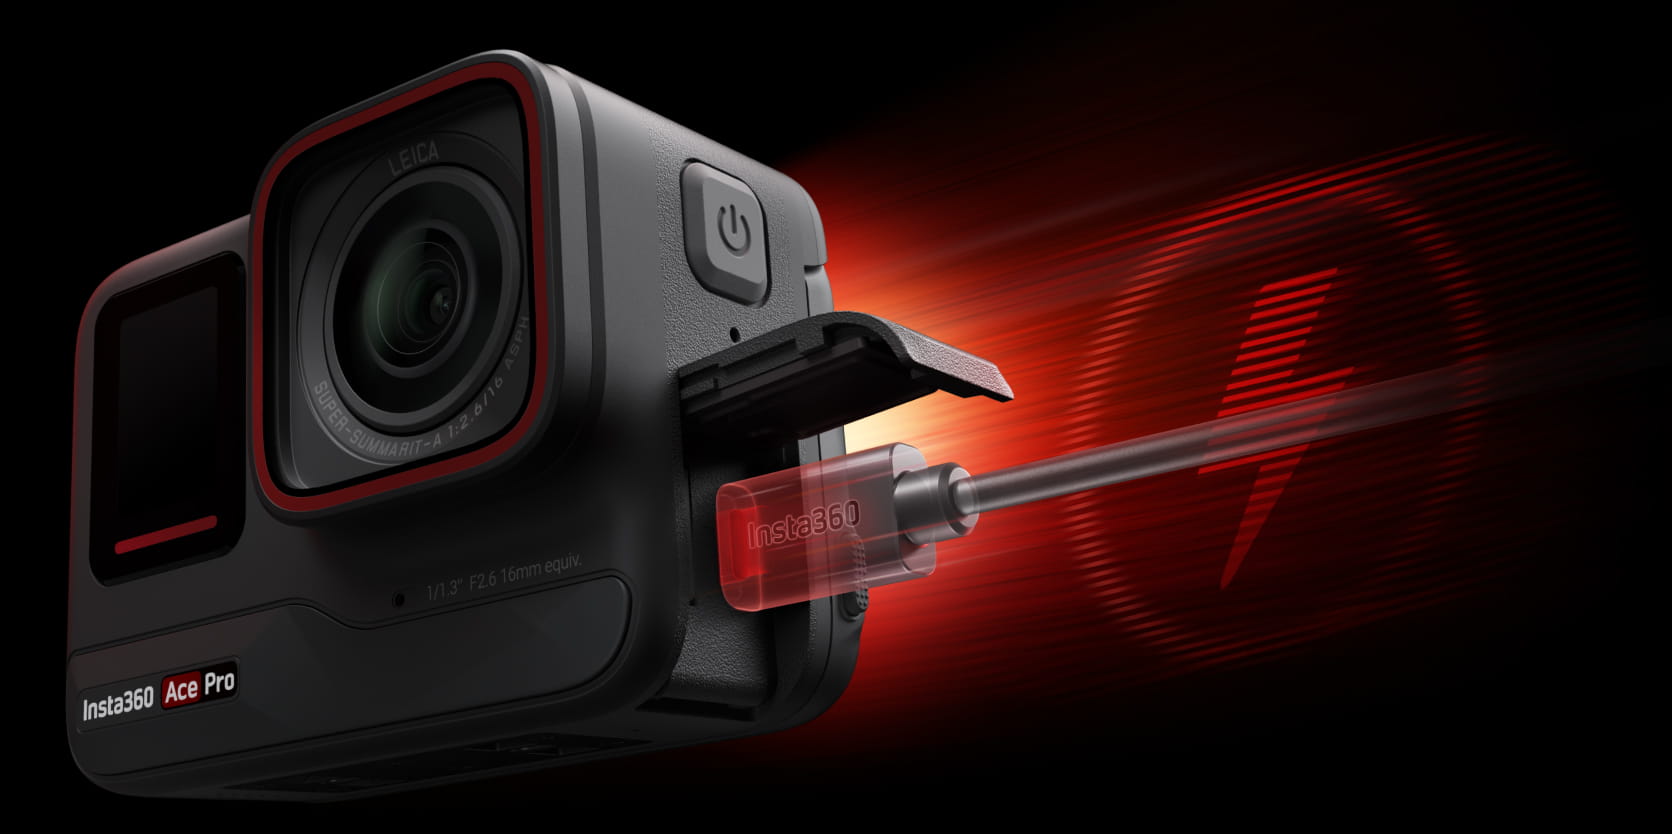 Insta360 ACE Pro 8K Action Camera